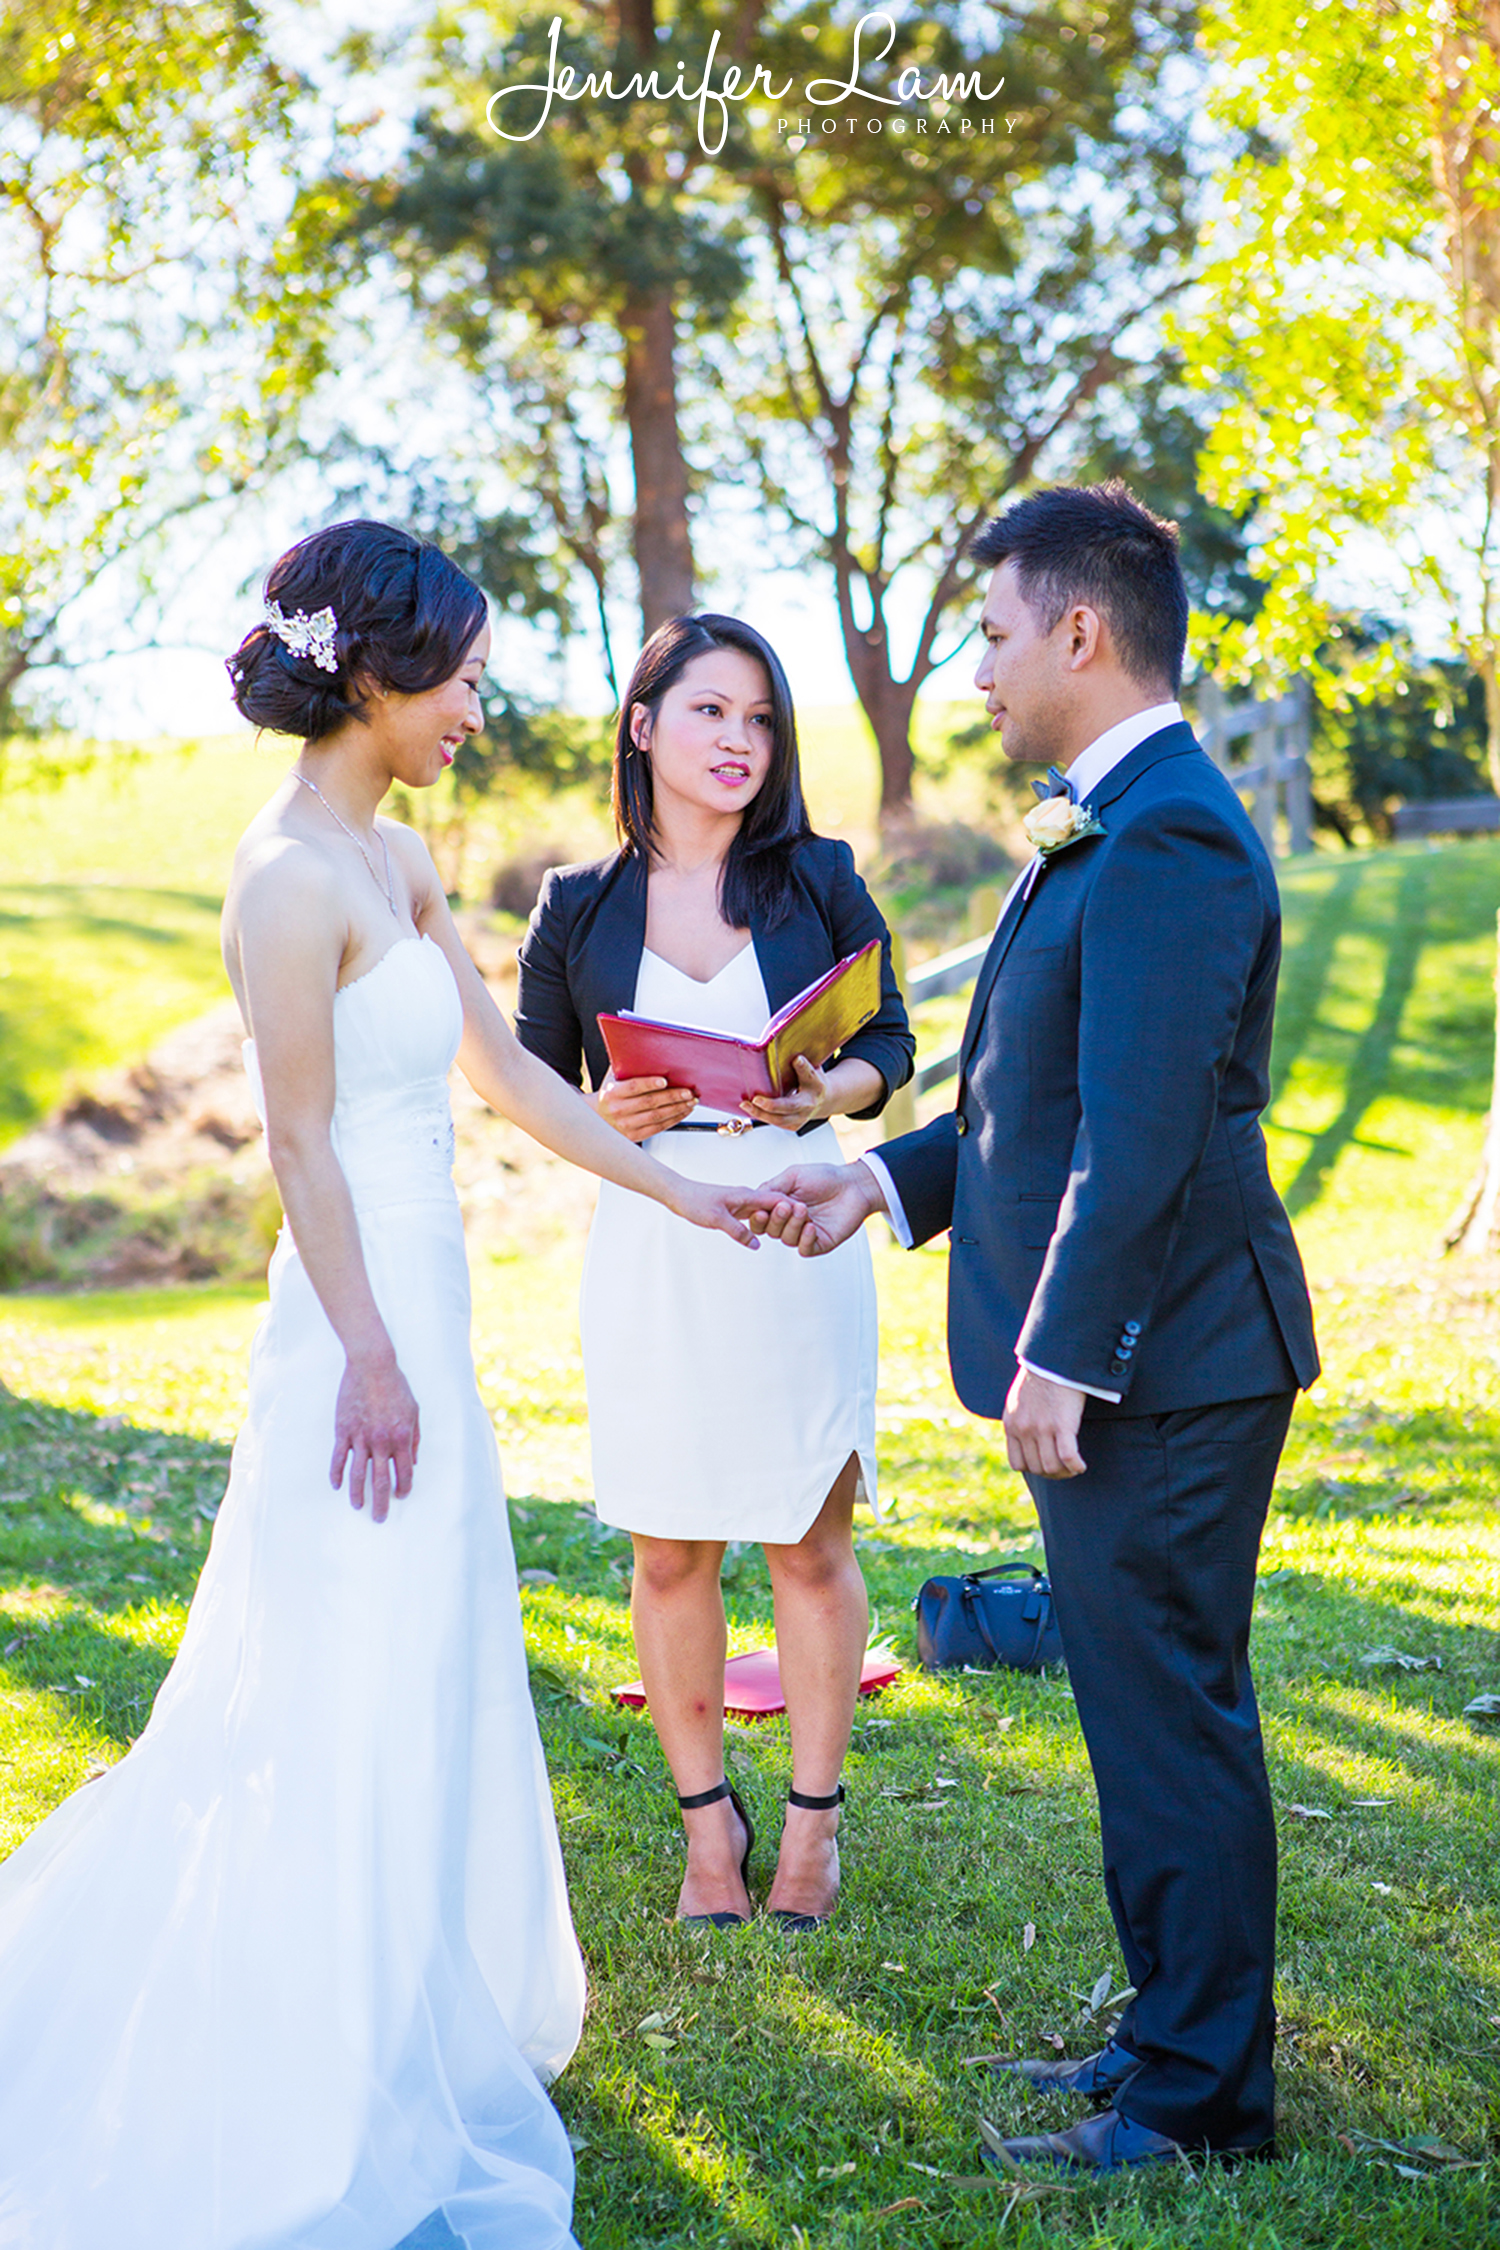 Sydney Wedding Photographer - Jennifer Lam Photography (51).jpg